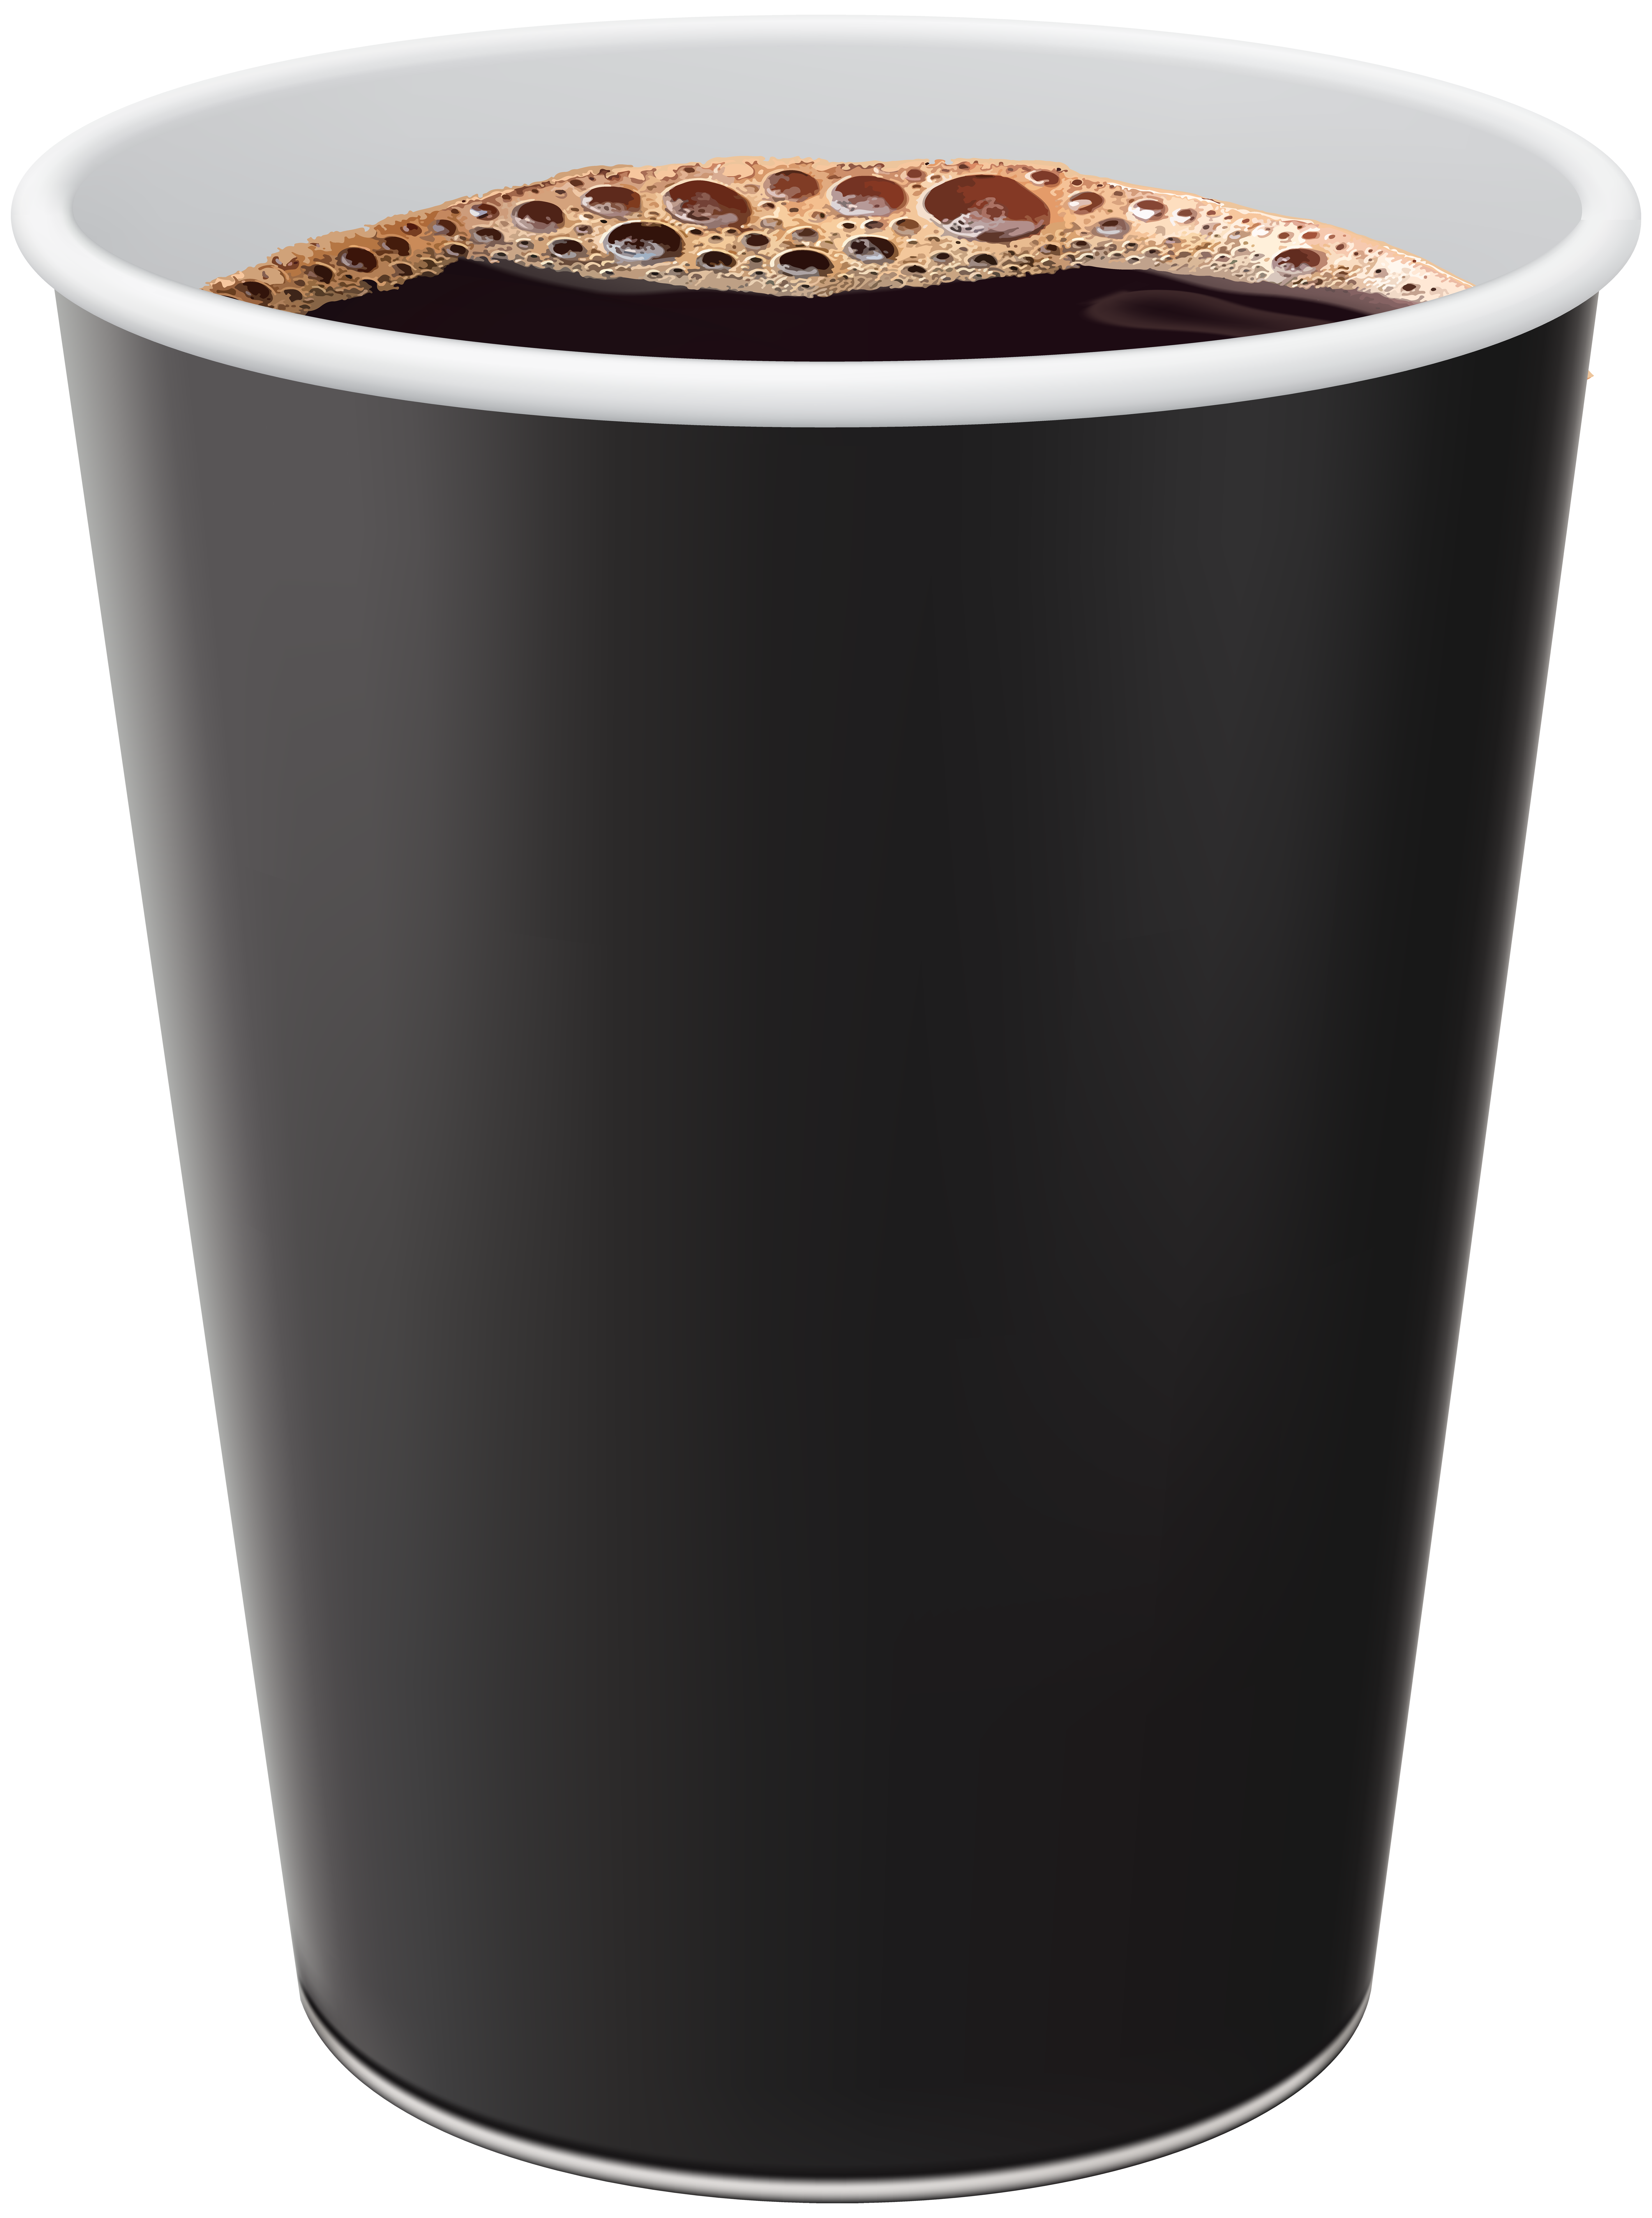 Takeaway Coffee Cup PNG Clip Art